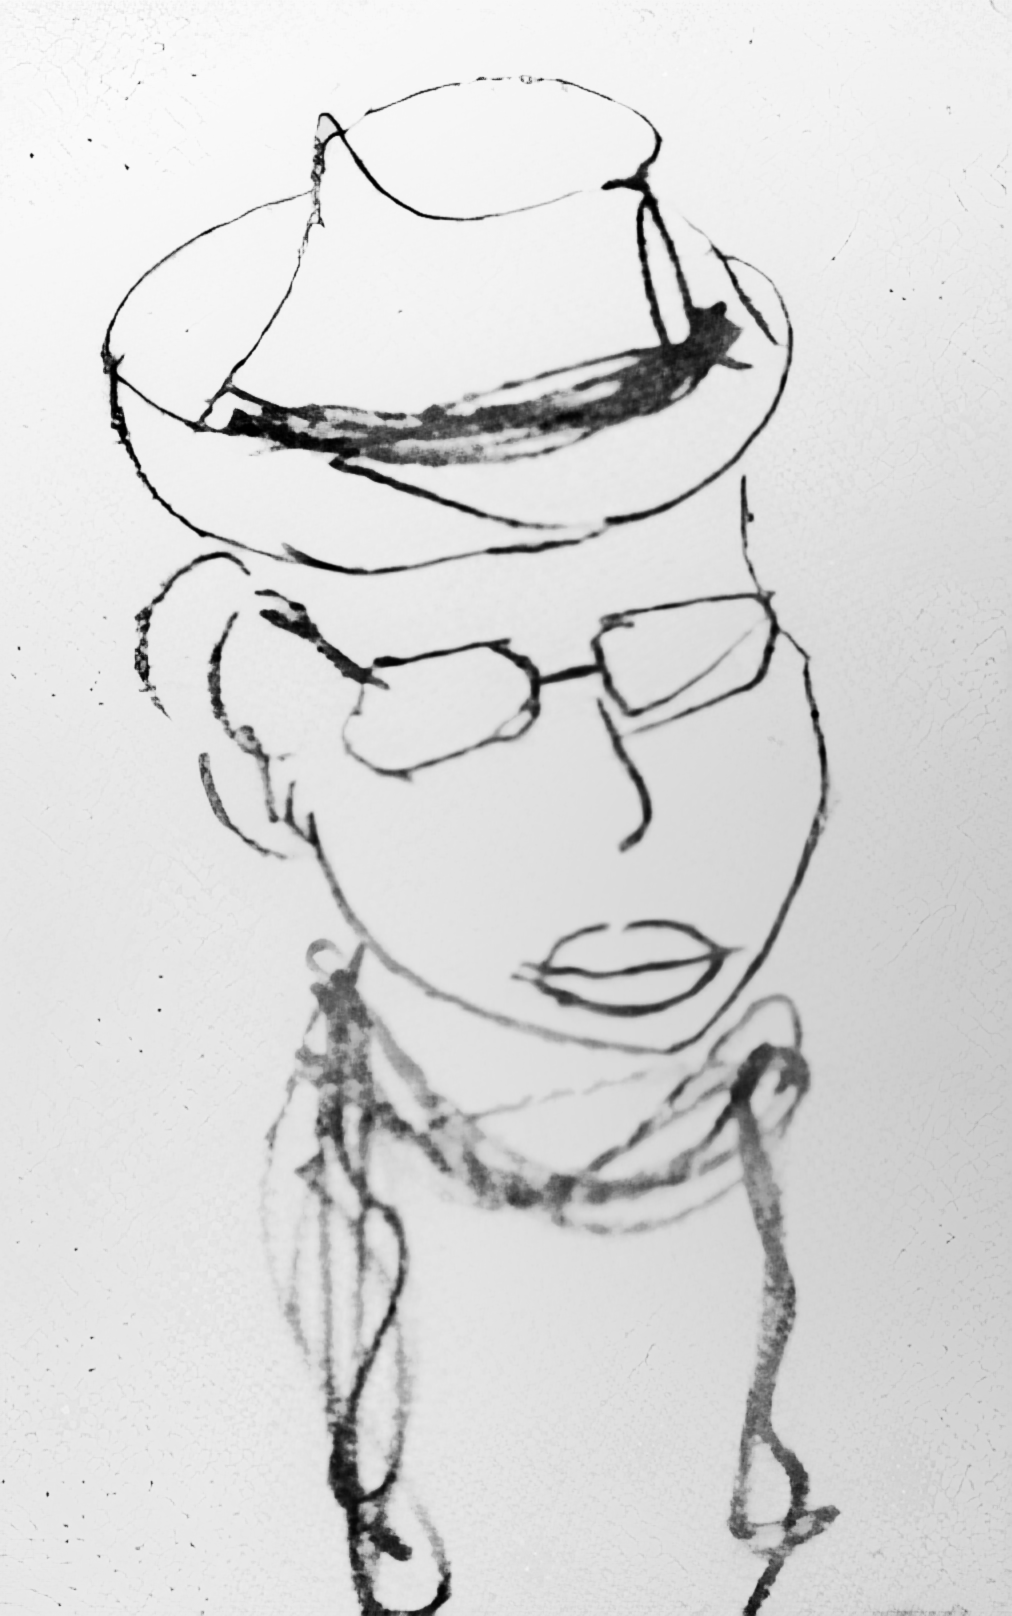 Jordan as drawn by Tom Green